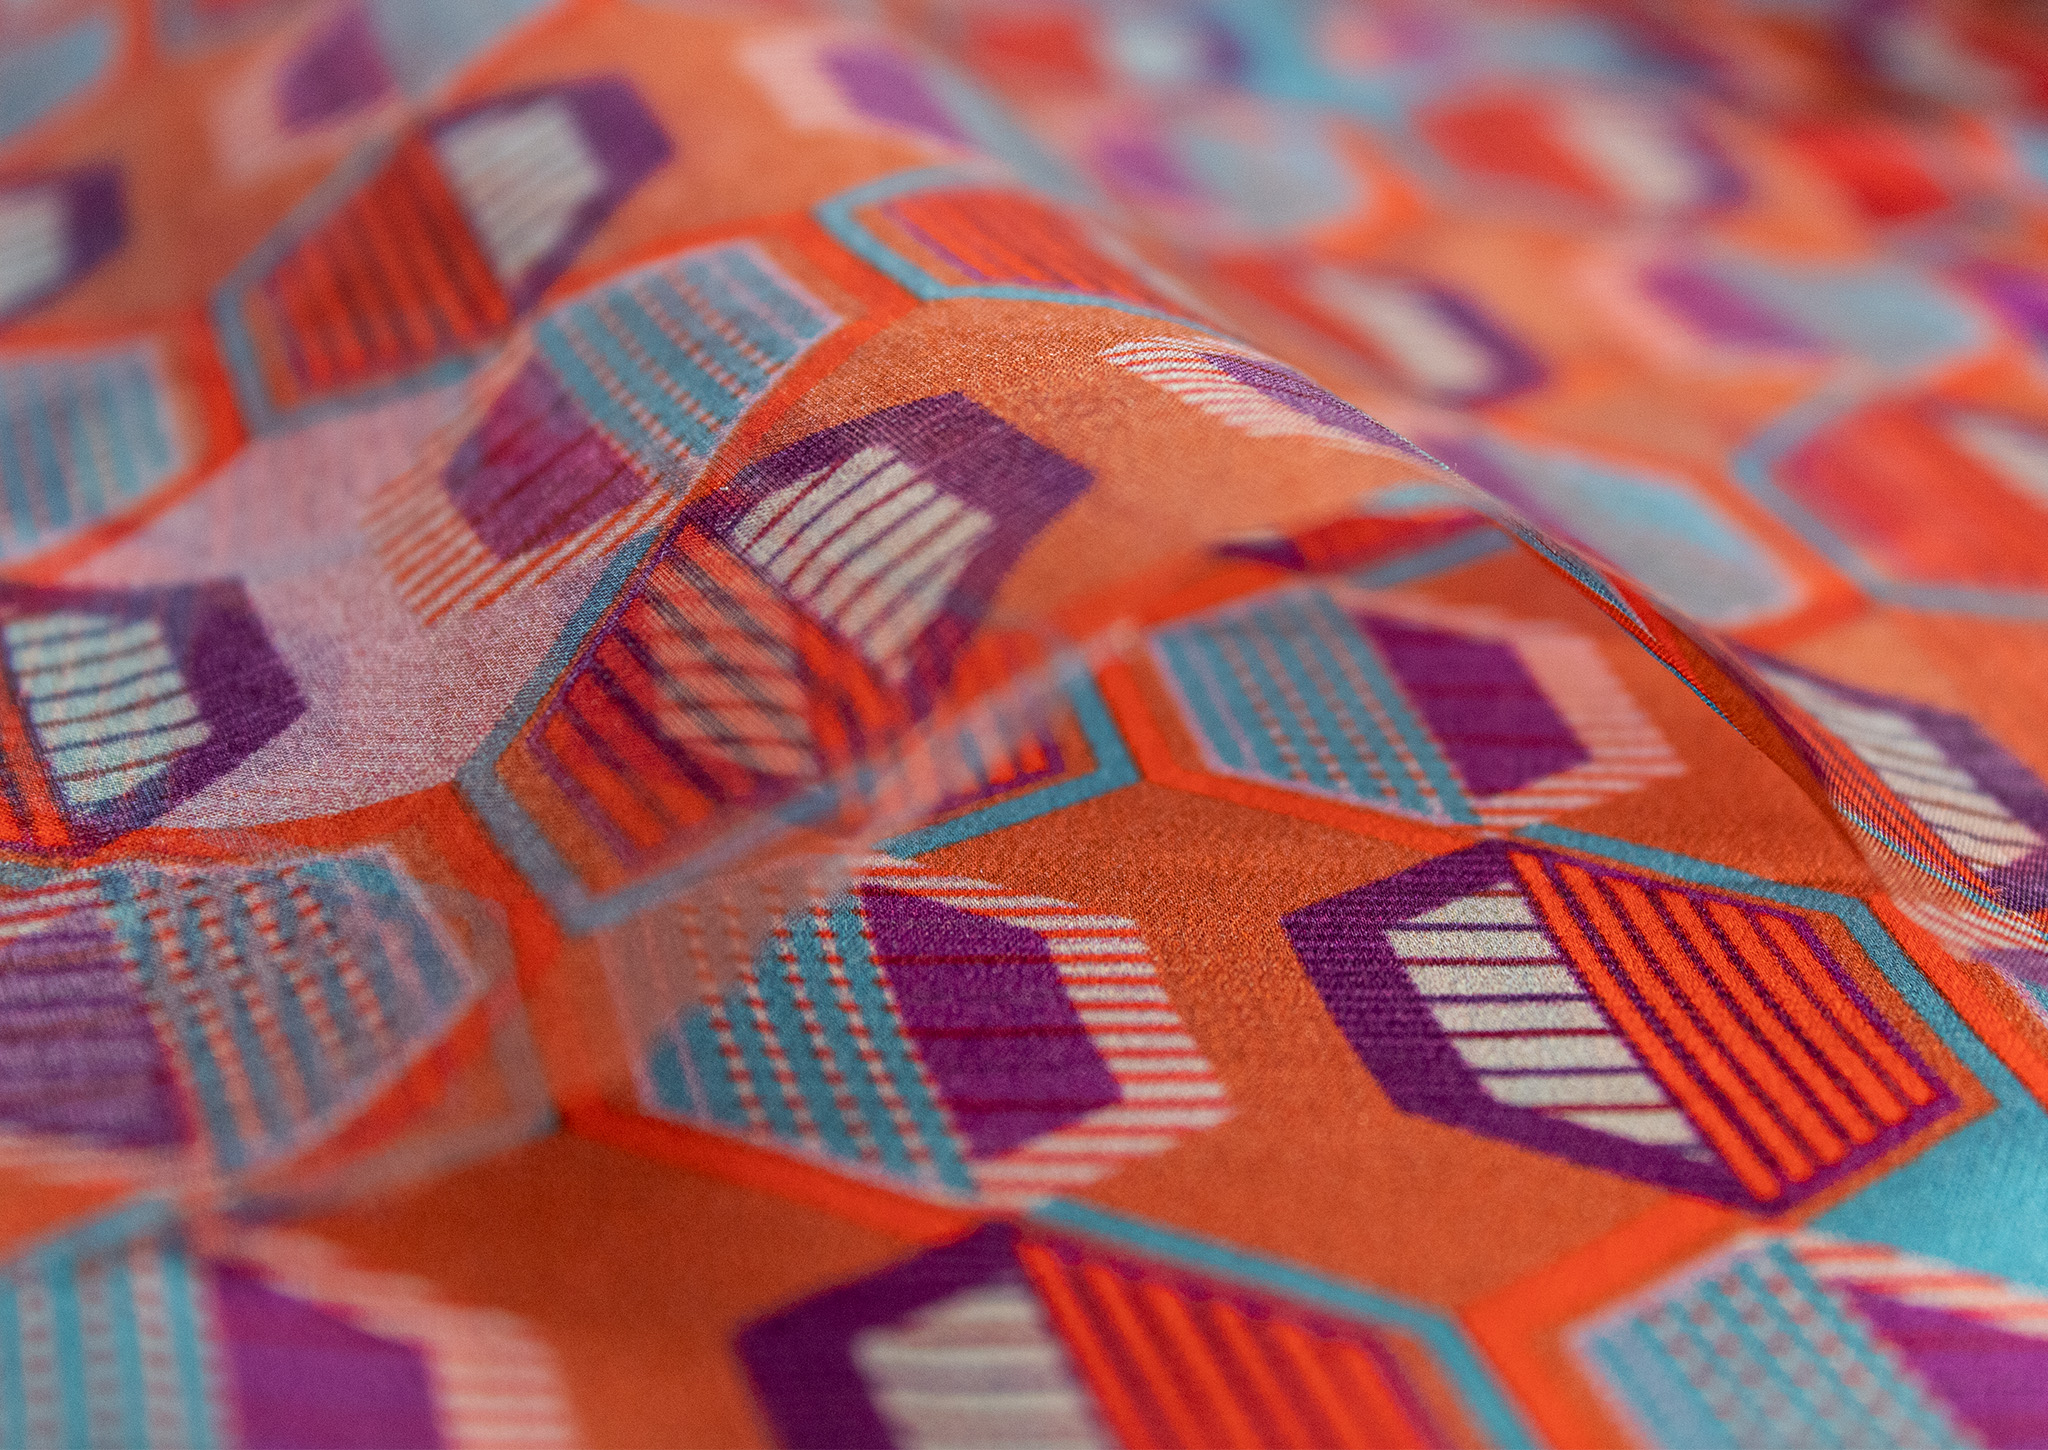 Colourful and original fabrics at MU Opulence. © Milano Unica